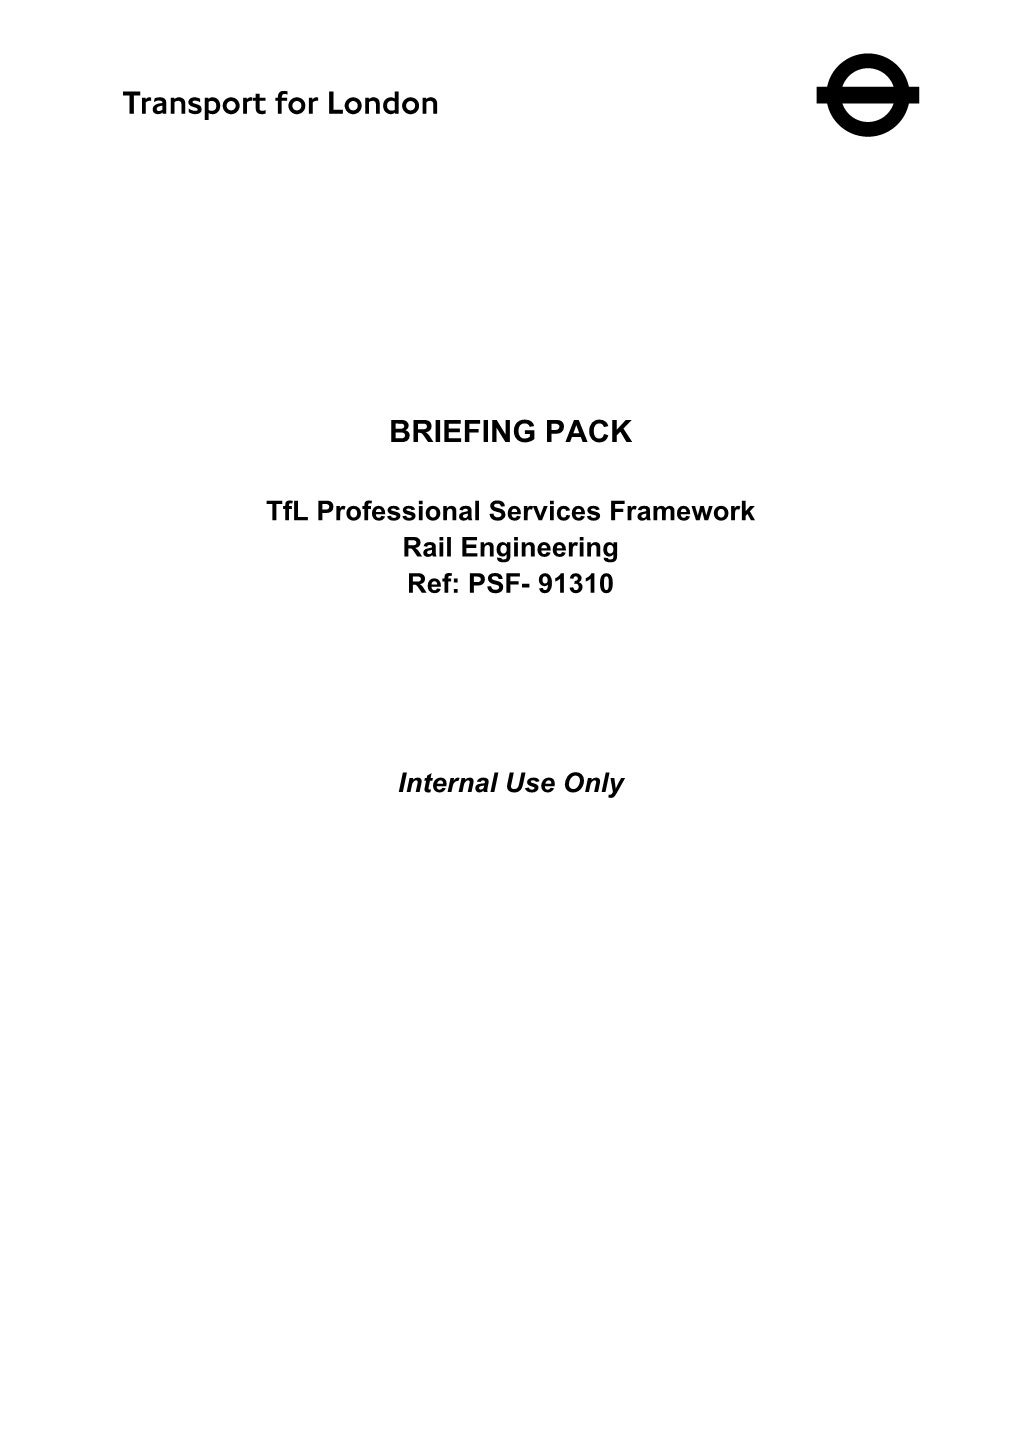 Rail Engineering Services PDF 812KB